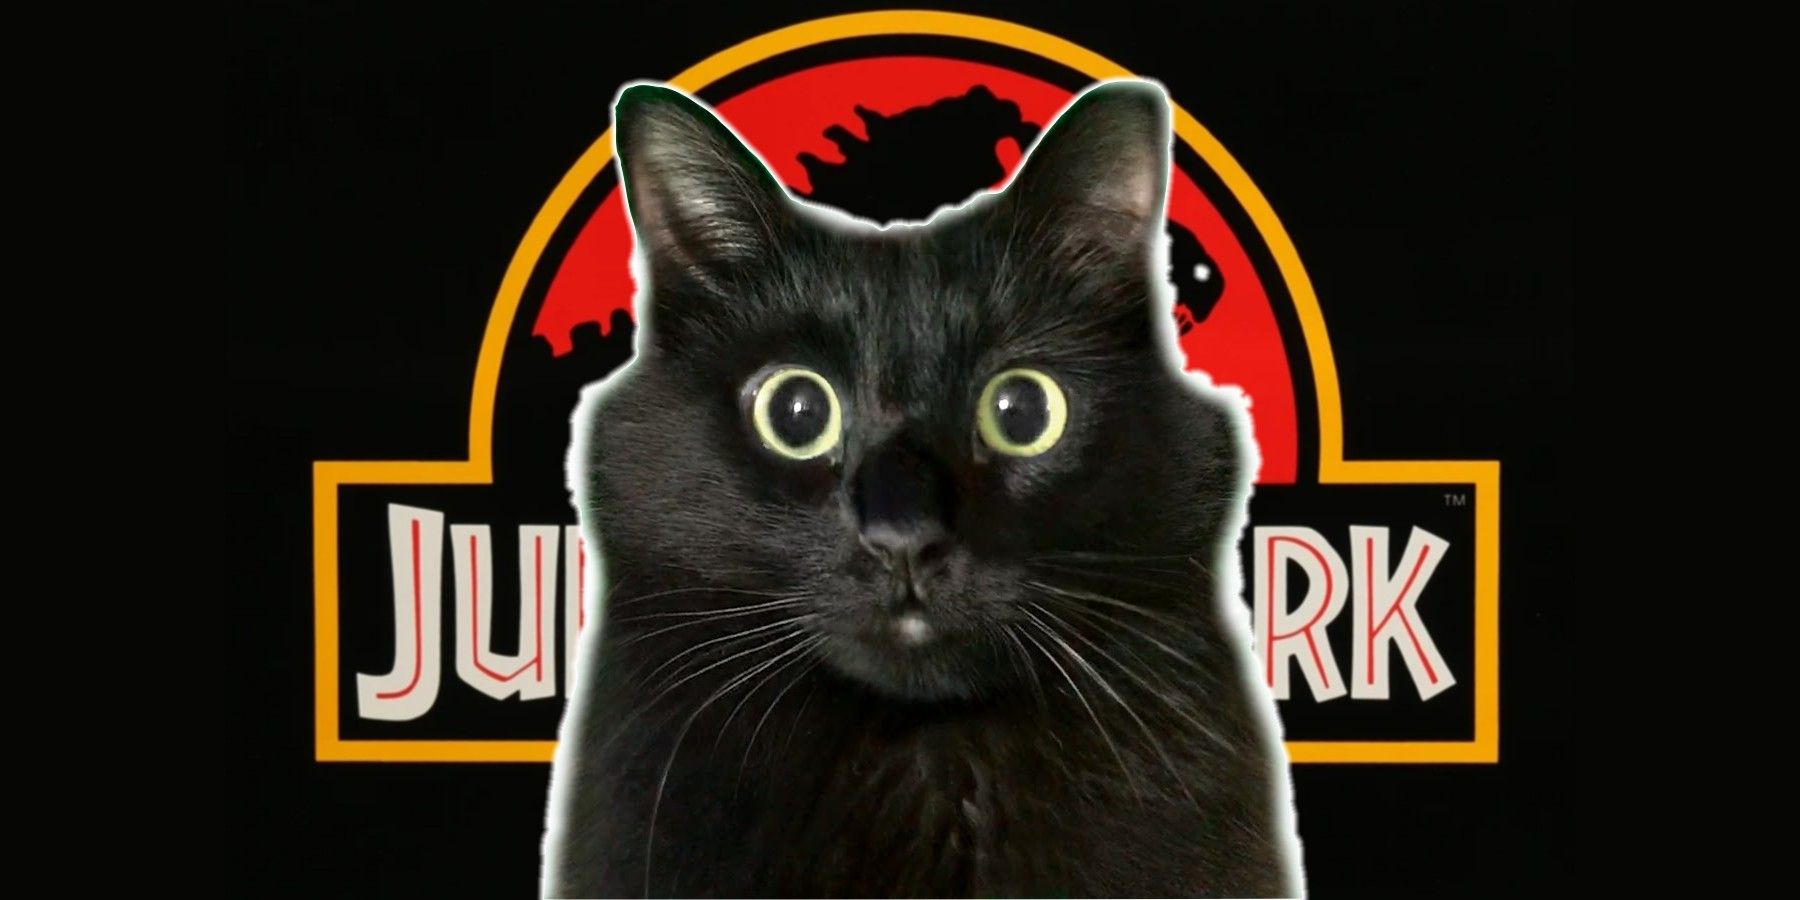 Jurassic Park cat OwlKitty